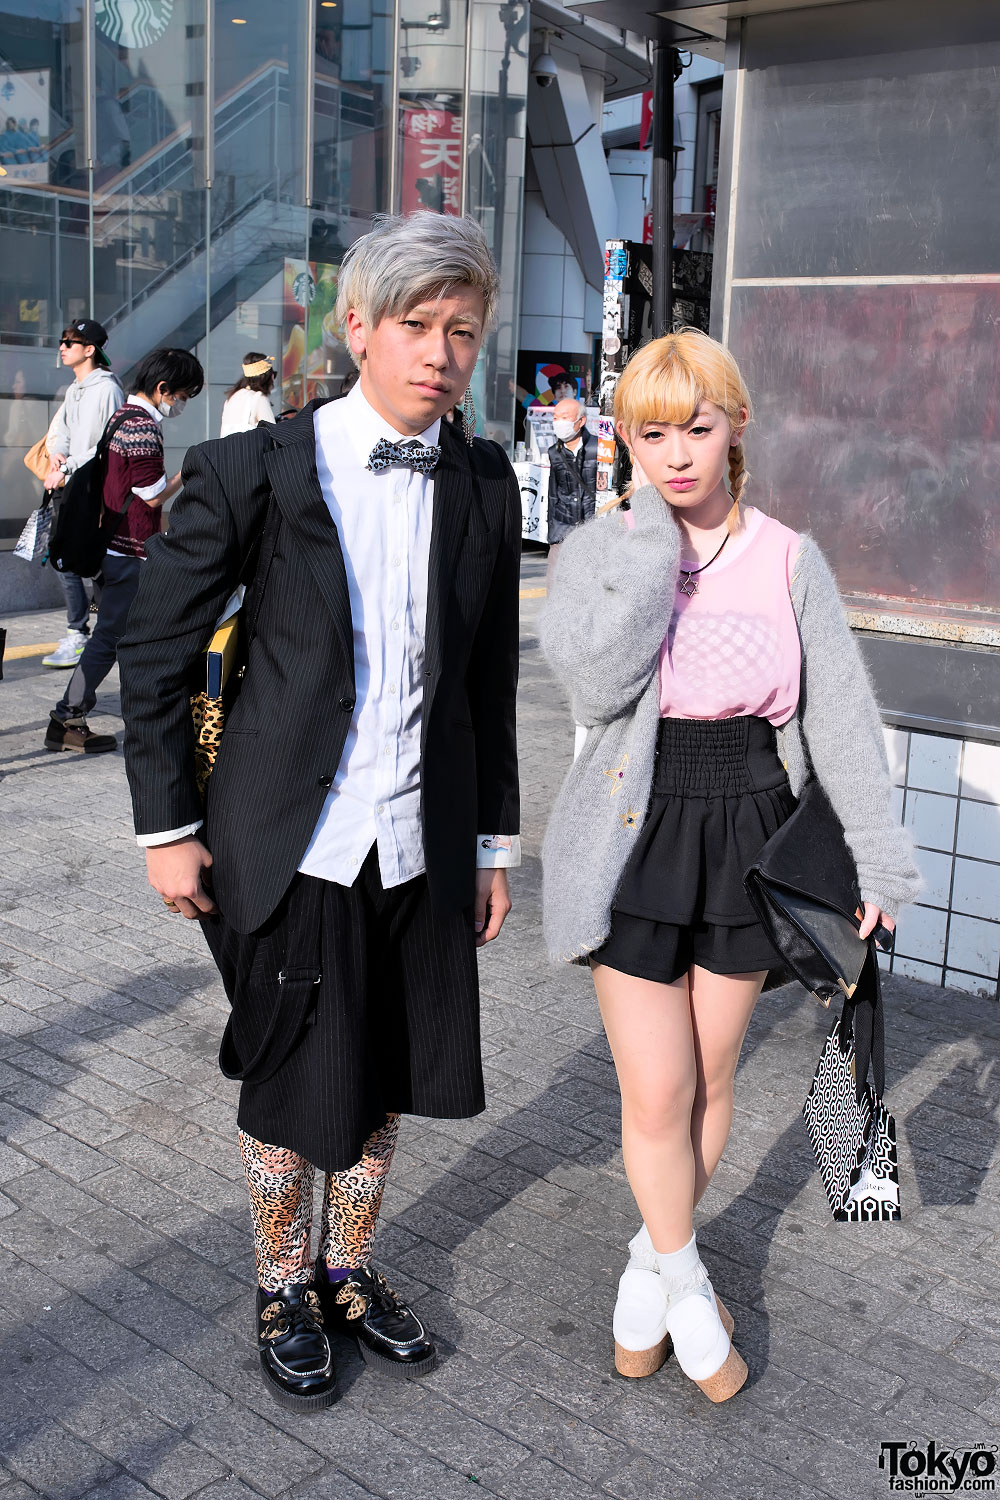 Stylish Shibuya Pair's LOVE/HATE Creepers, Tiered Skirt & Leopard Print